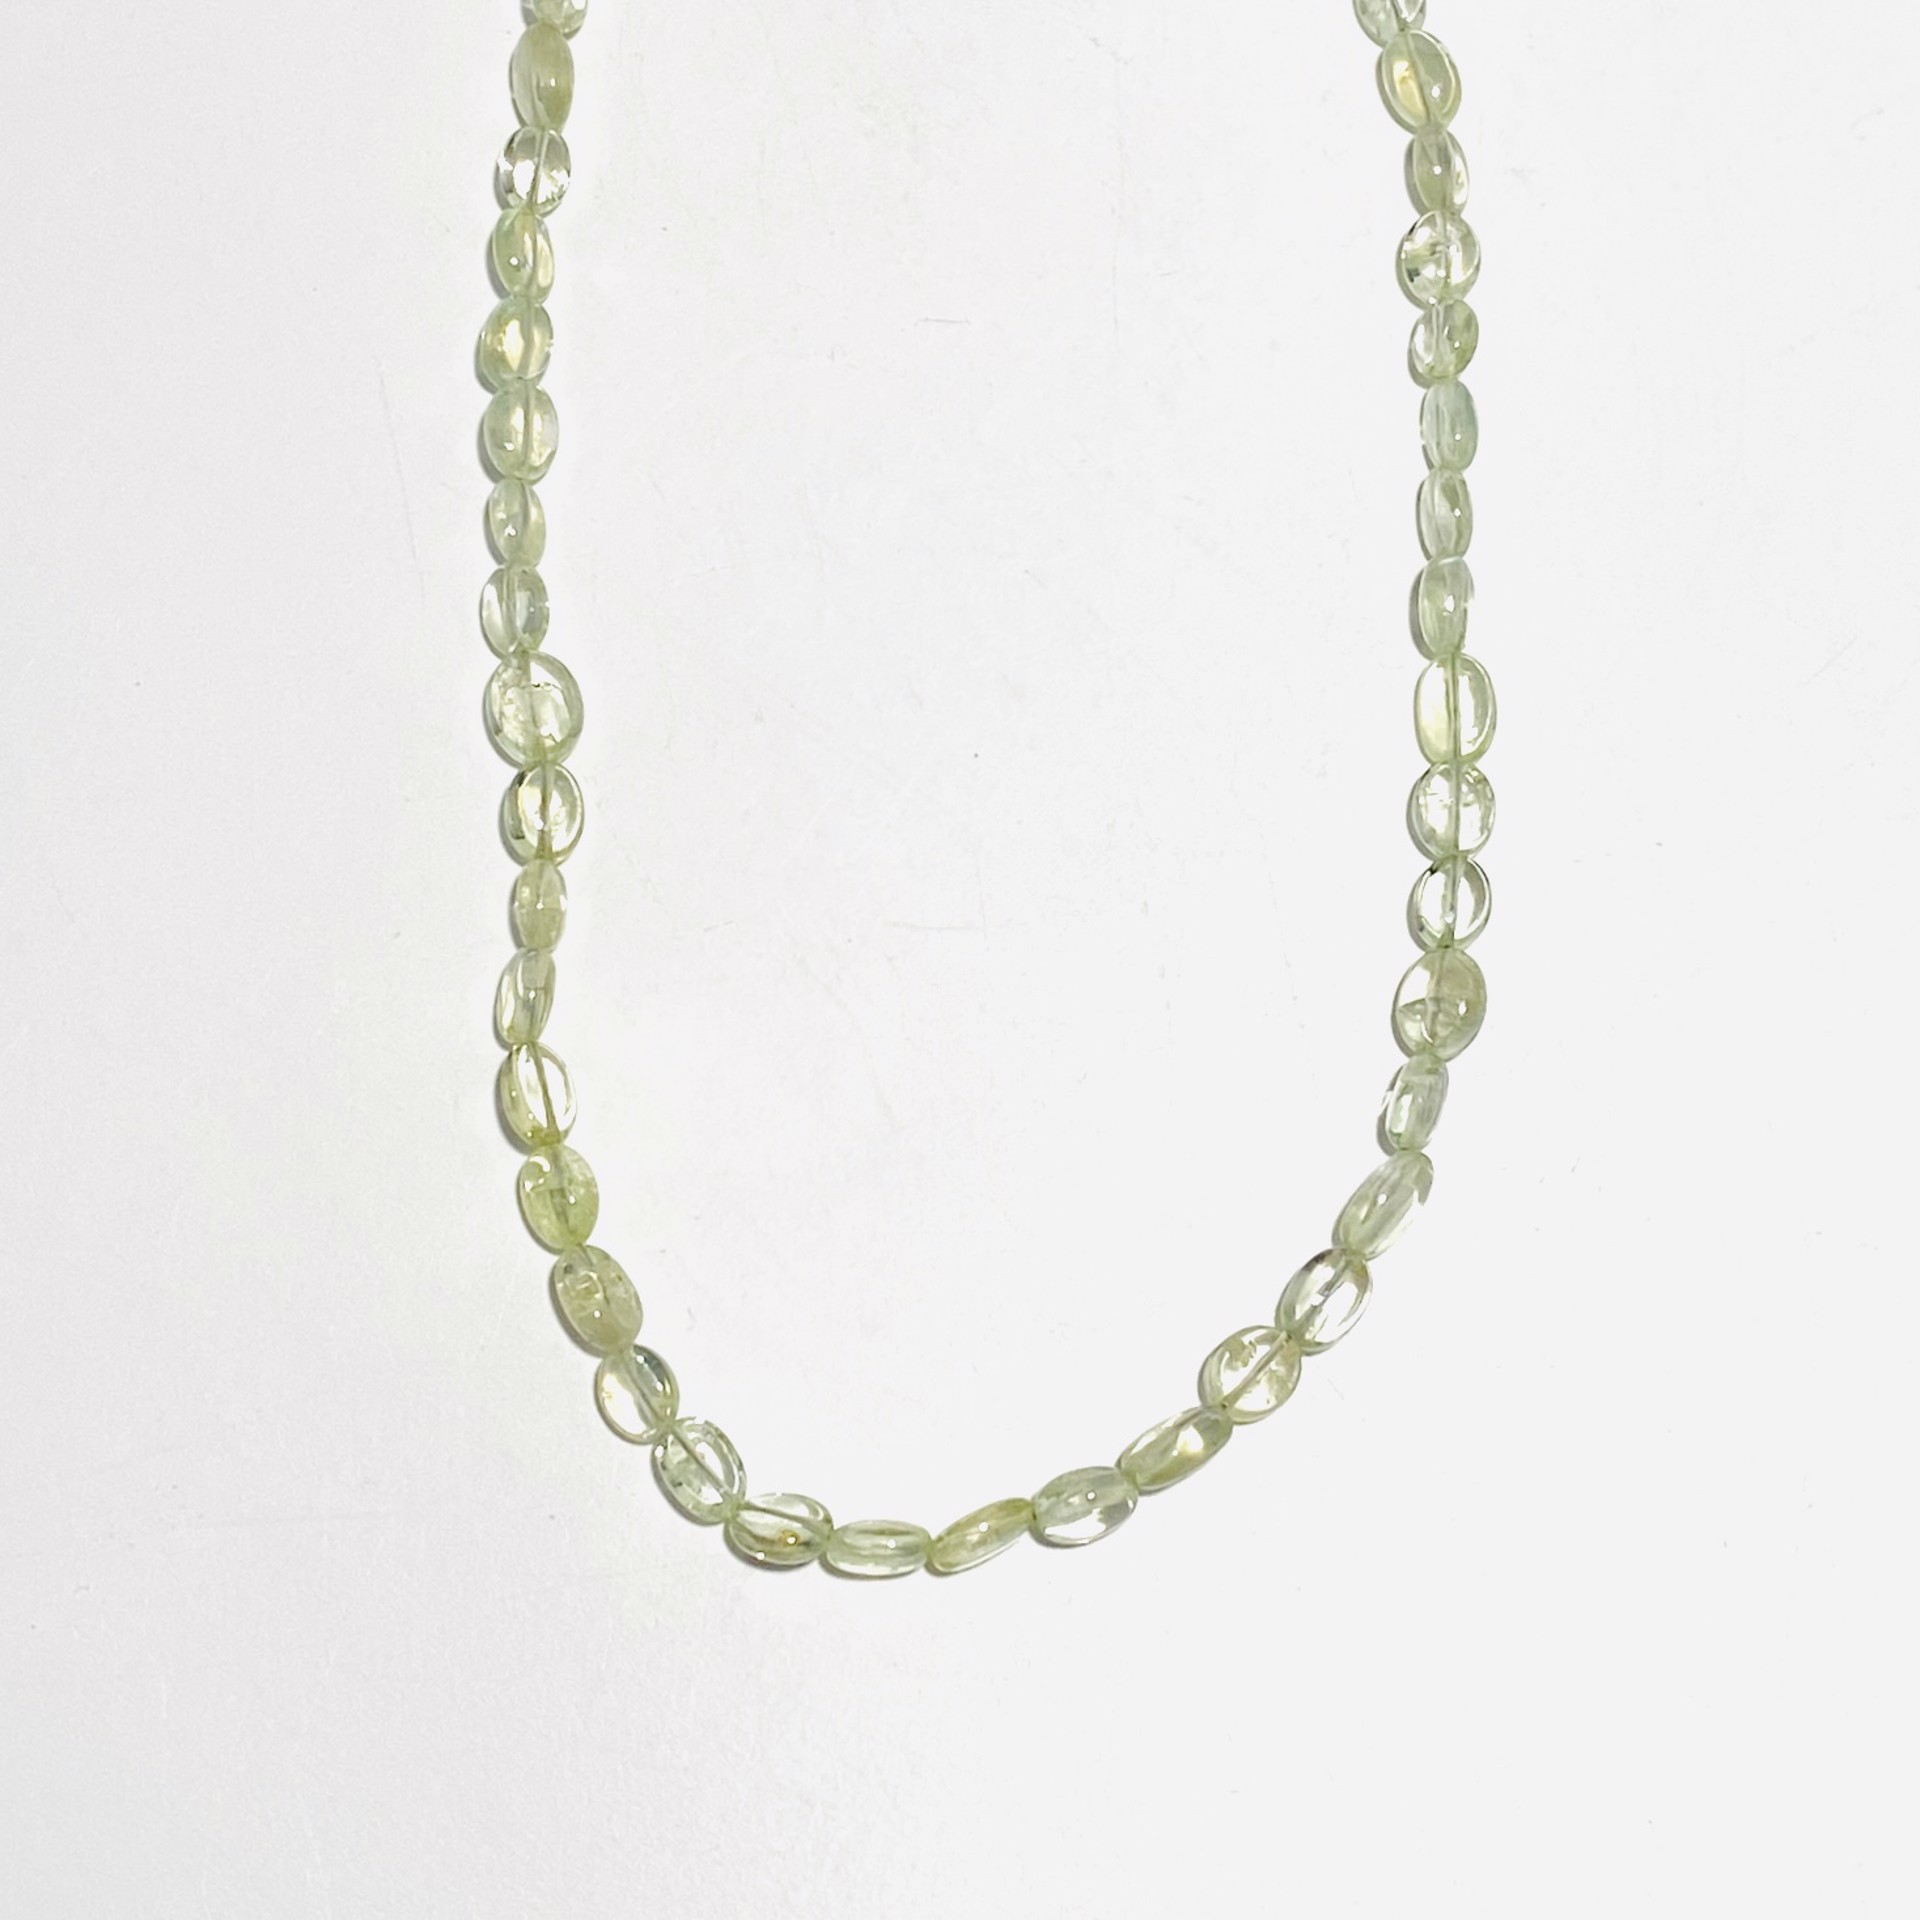 Oval Green Fluorite Bead Strand Necklace by Nance Trueworthy